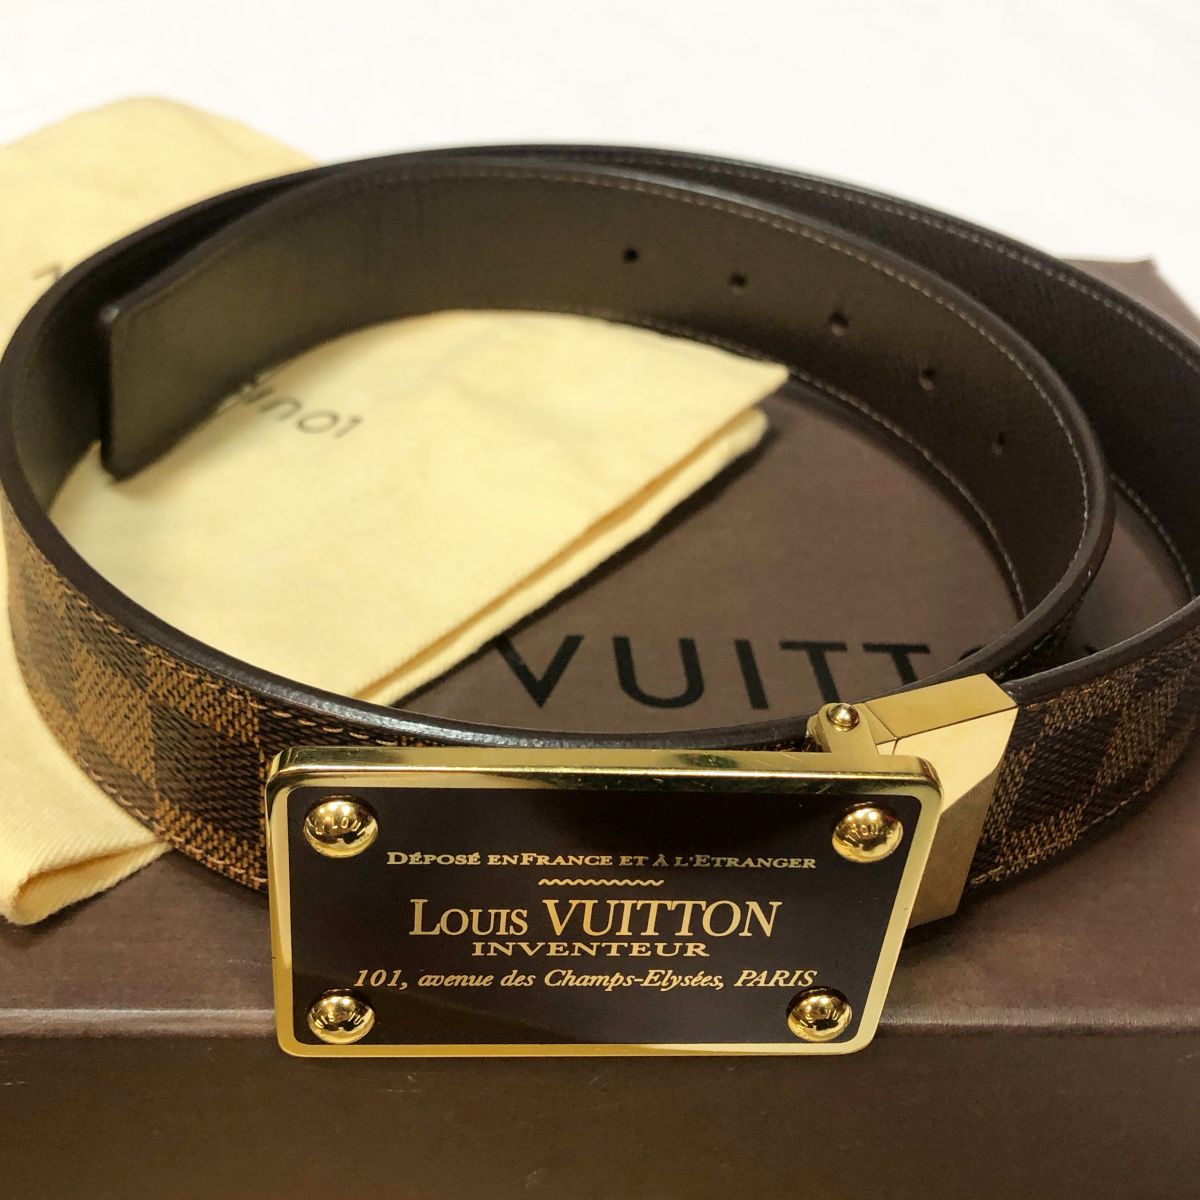 Ремень Louis Vuitton размер 85/34 цена 23 078 руб 